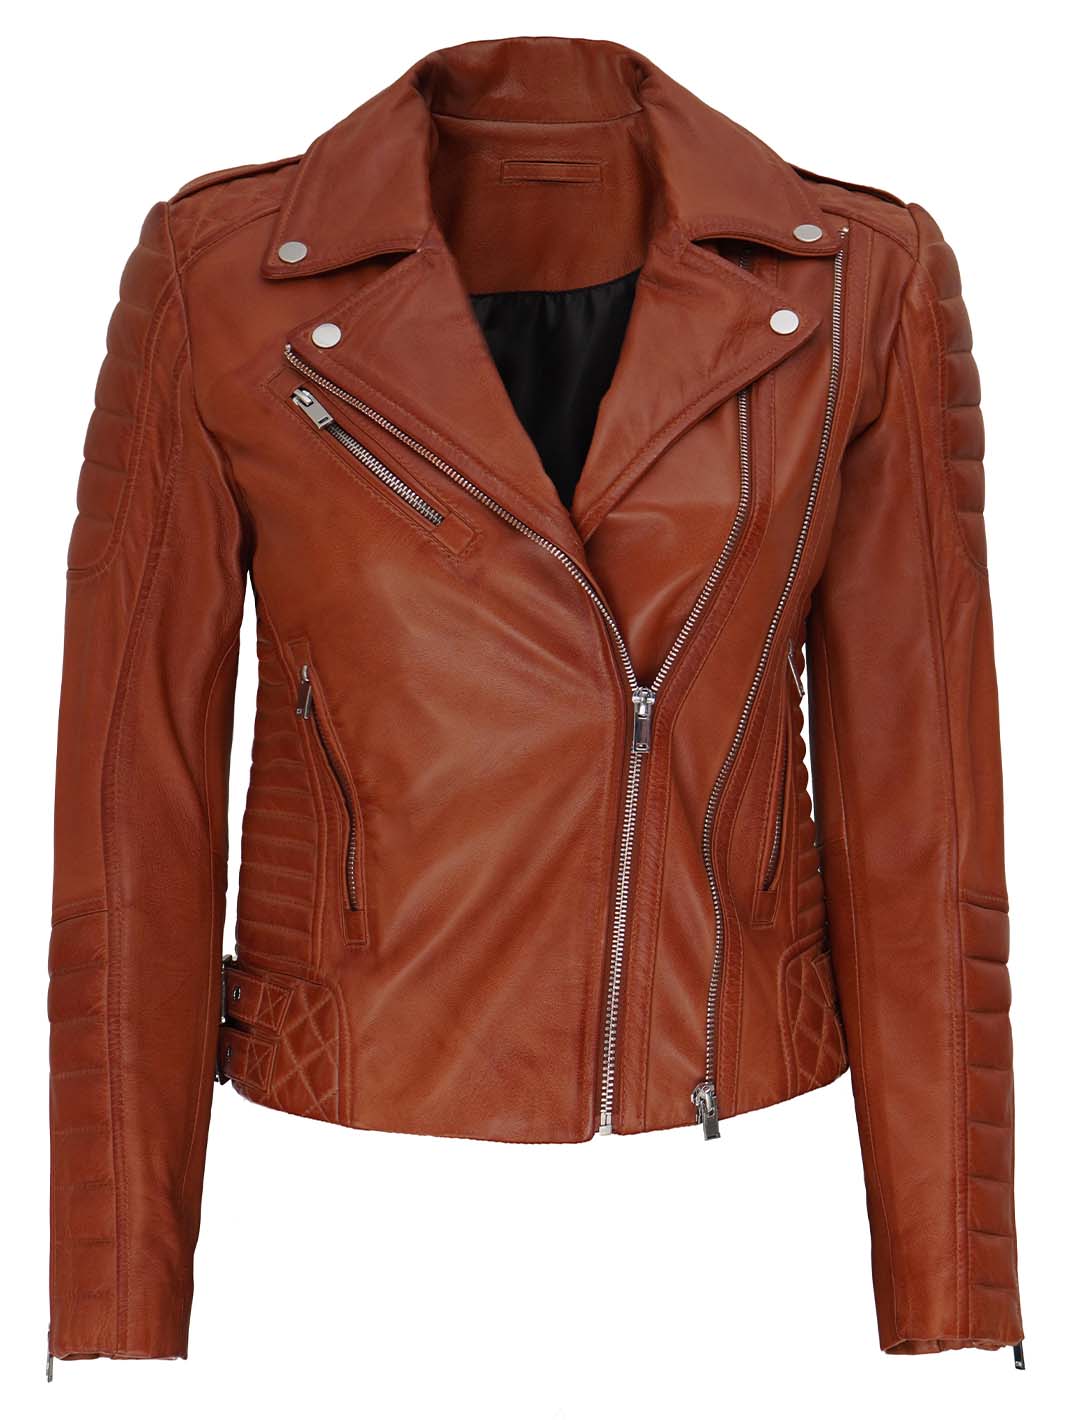 Lucillie Women's Tan Asymmetrical Cafe Racer Leather Jacket